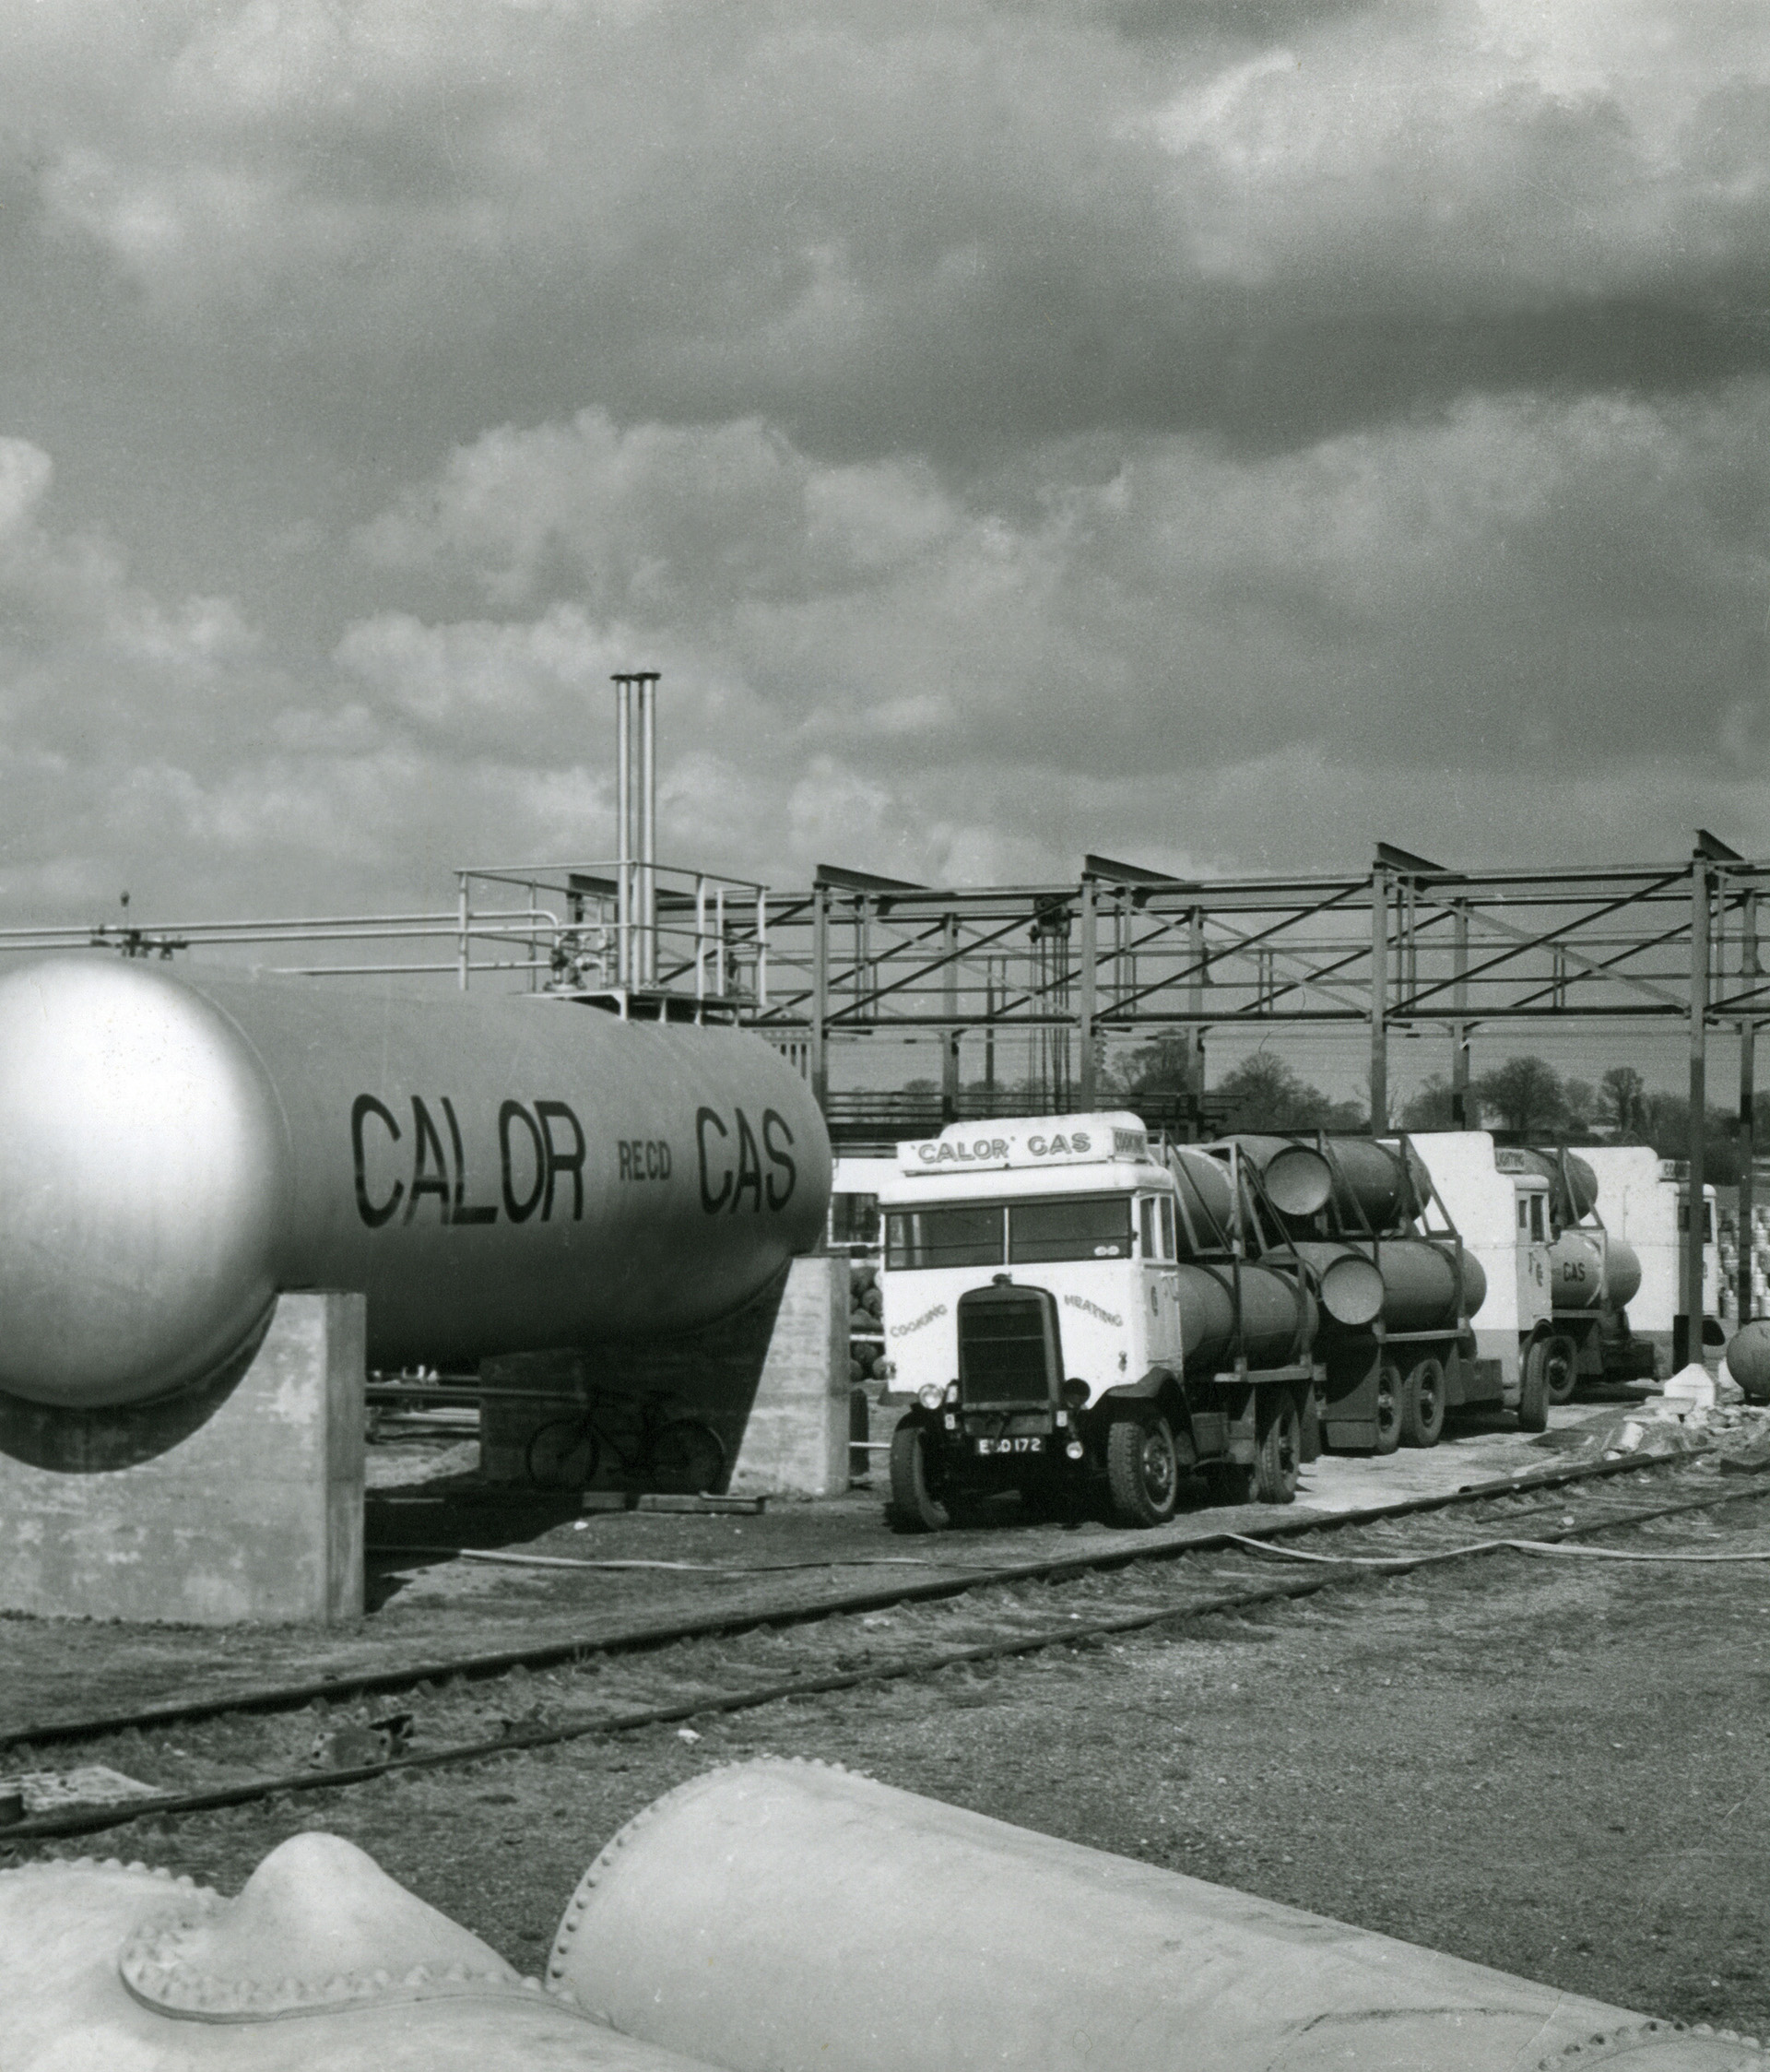 Bulk transport lorries, each with three tanks, discharging gas into storage vessels